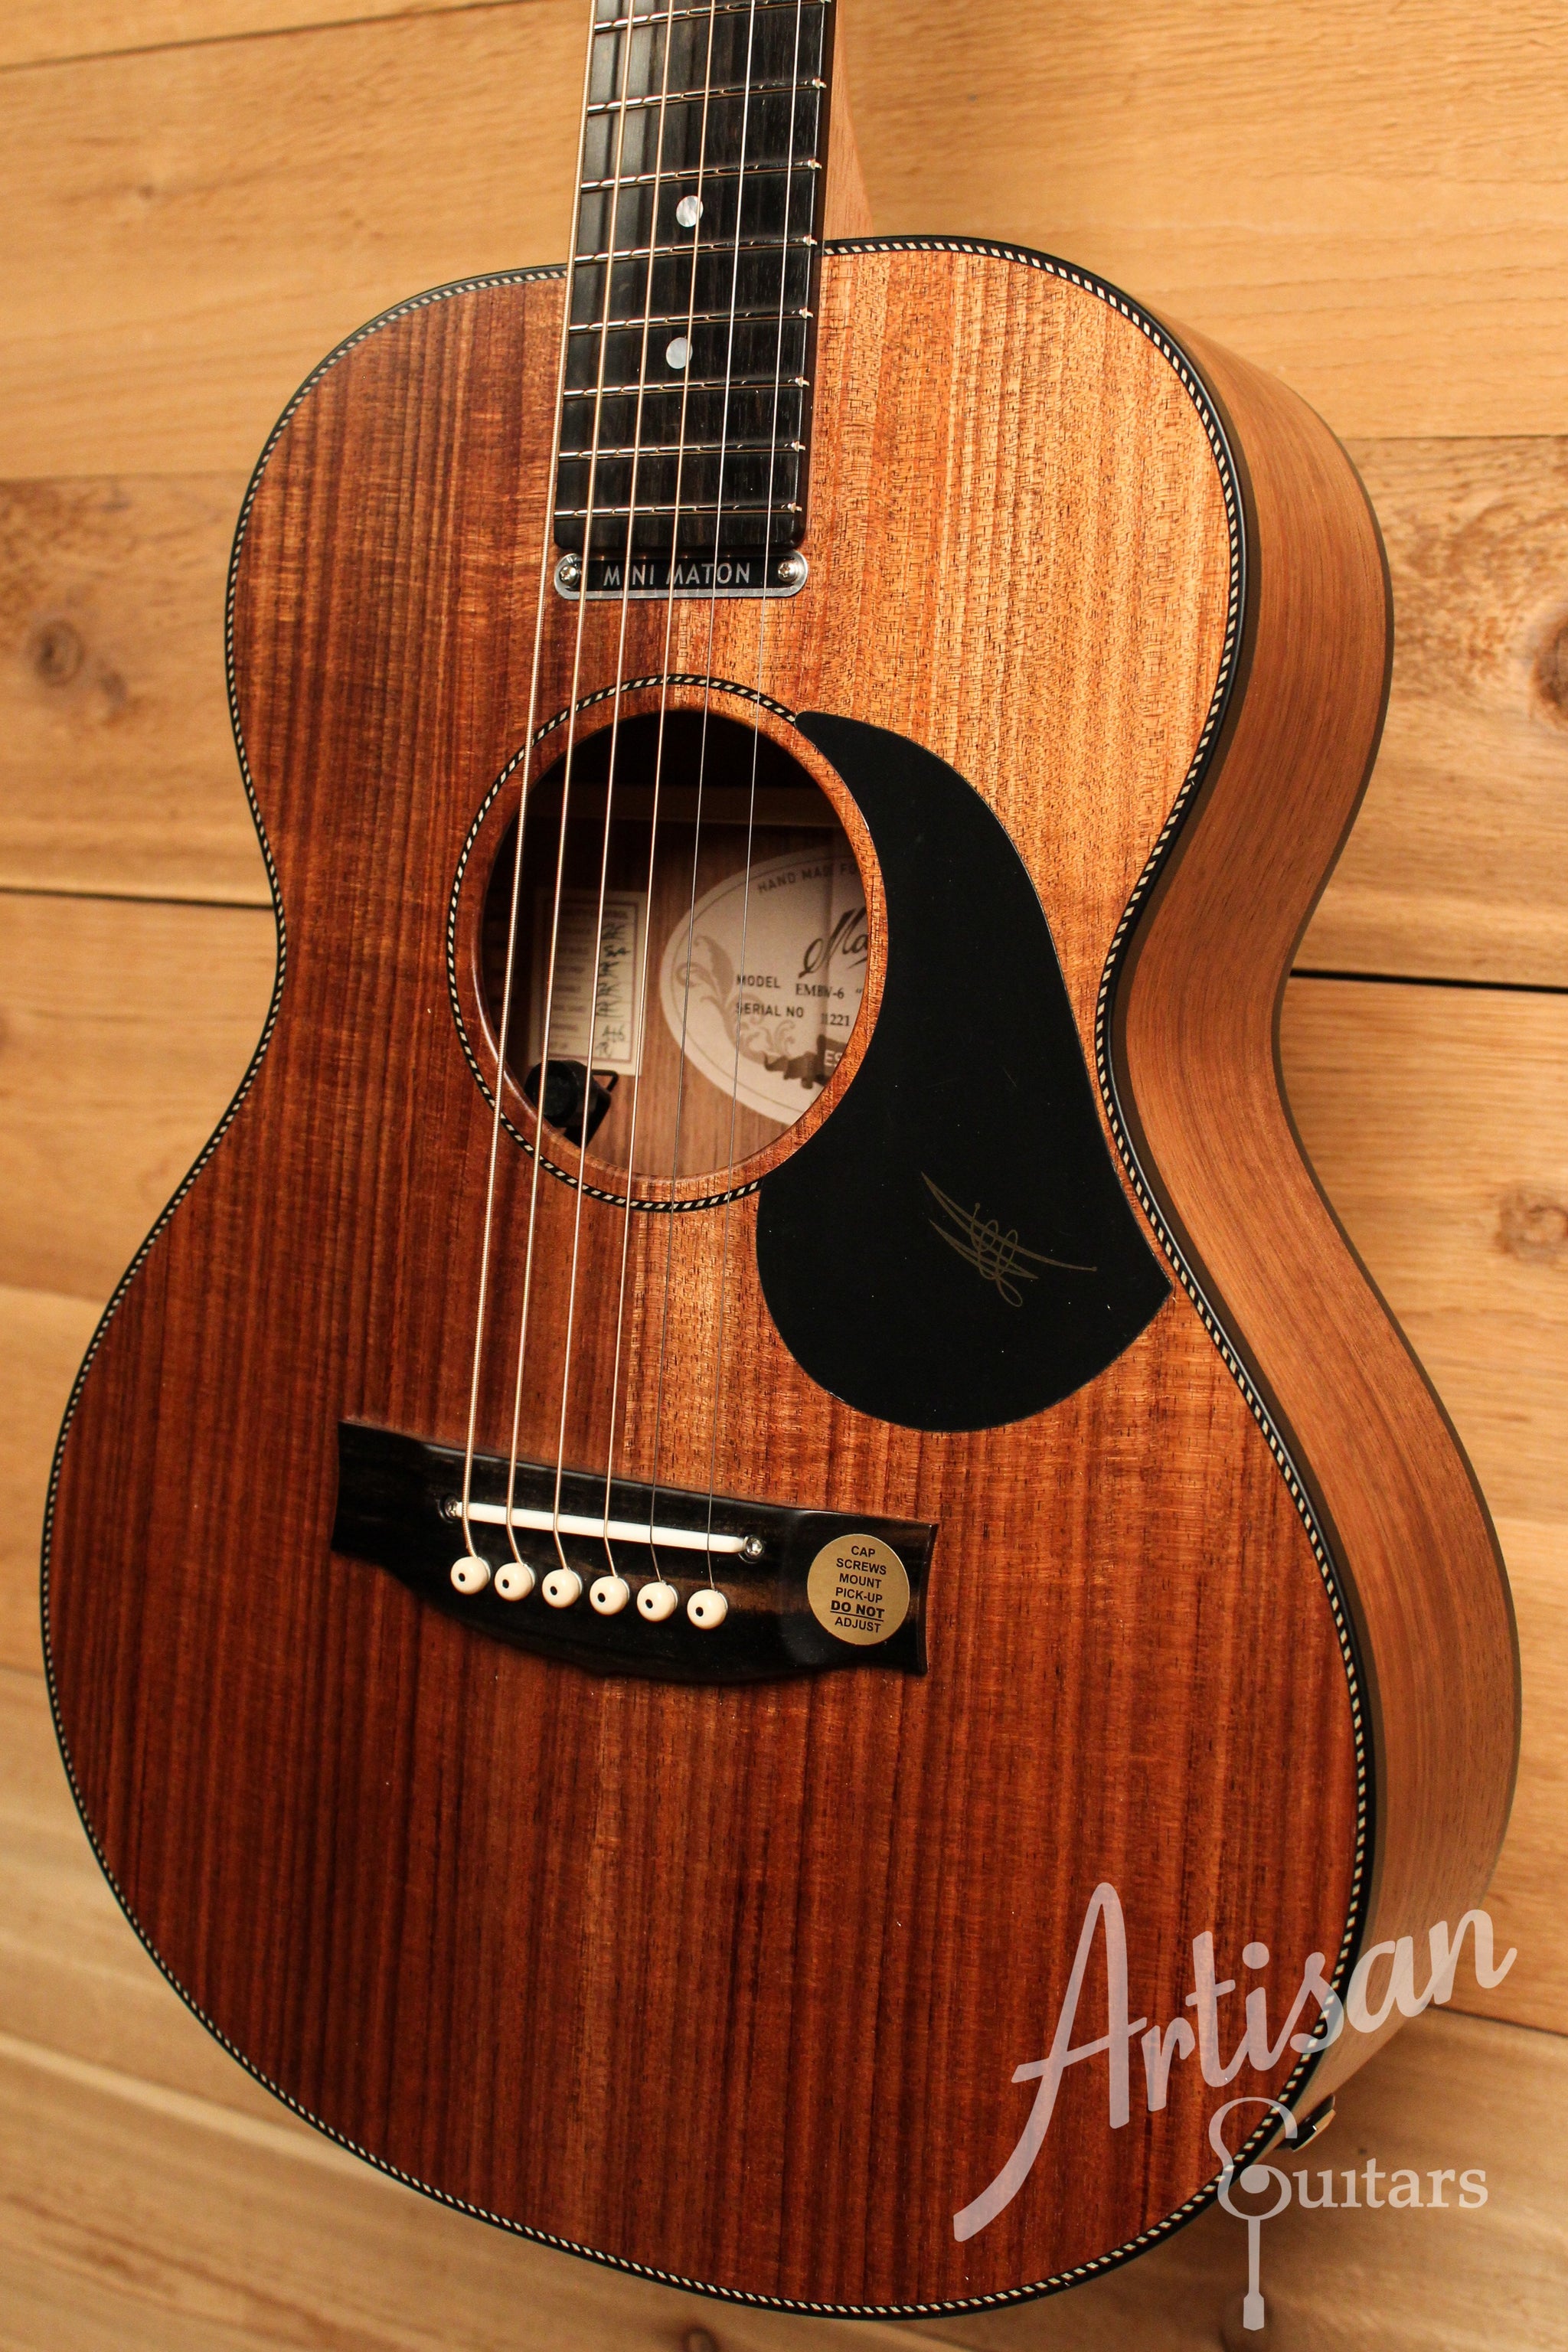 Maton EMBW6 Mini Guitar w/ Blackwood Top, Back & Sides and AP5 Pro Pickup System ID-12304 - Artisan Guitars